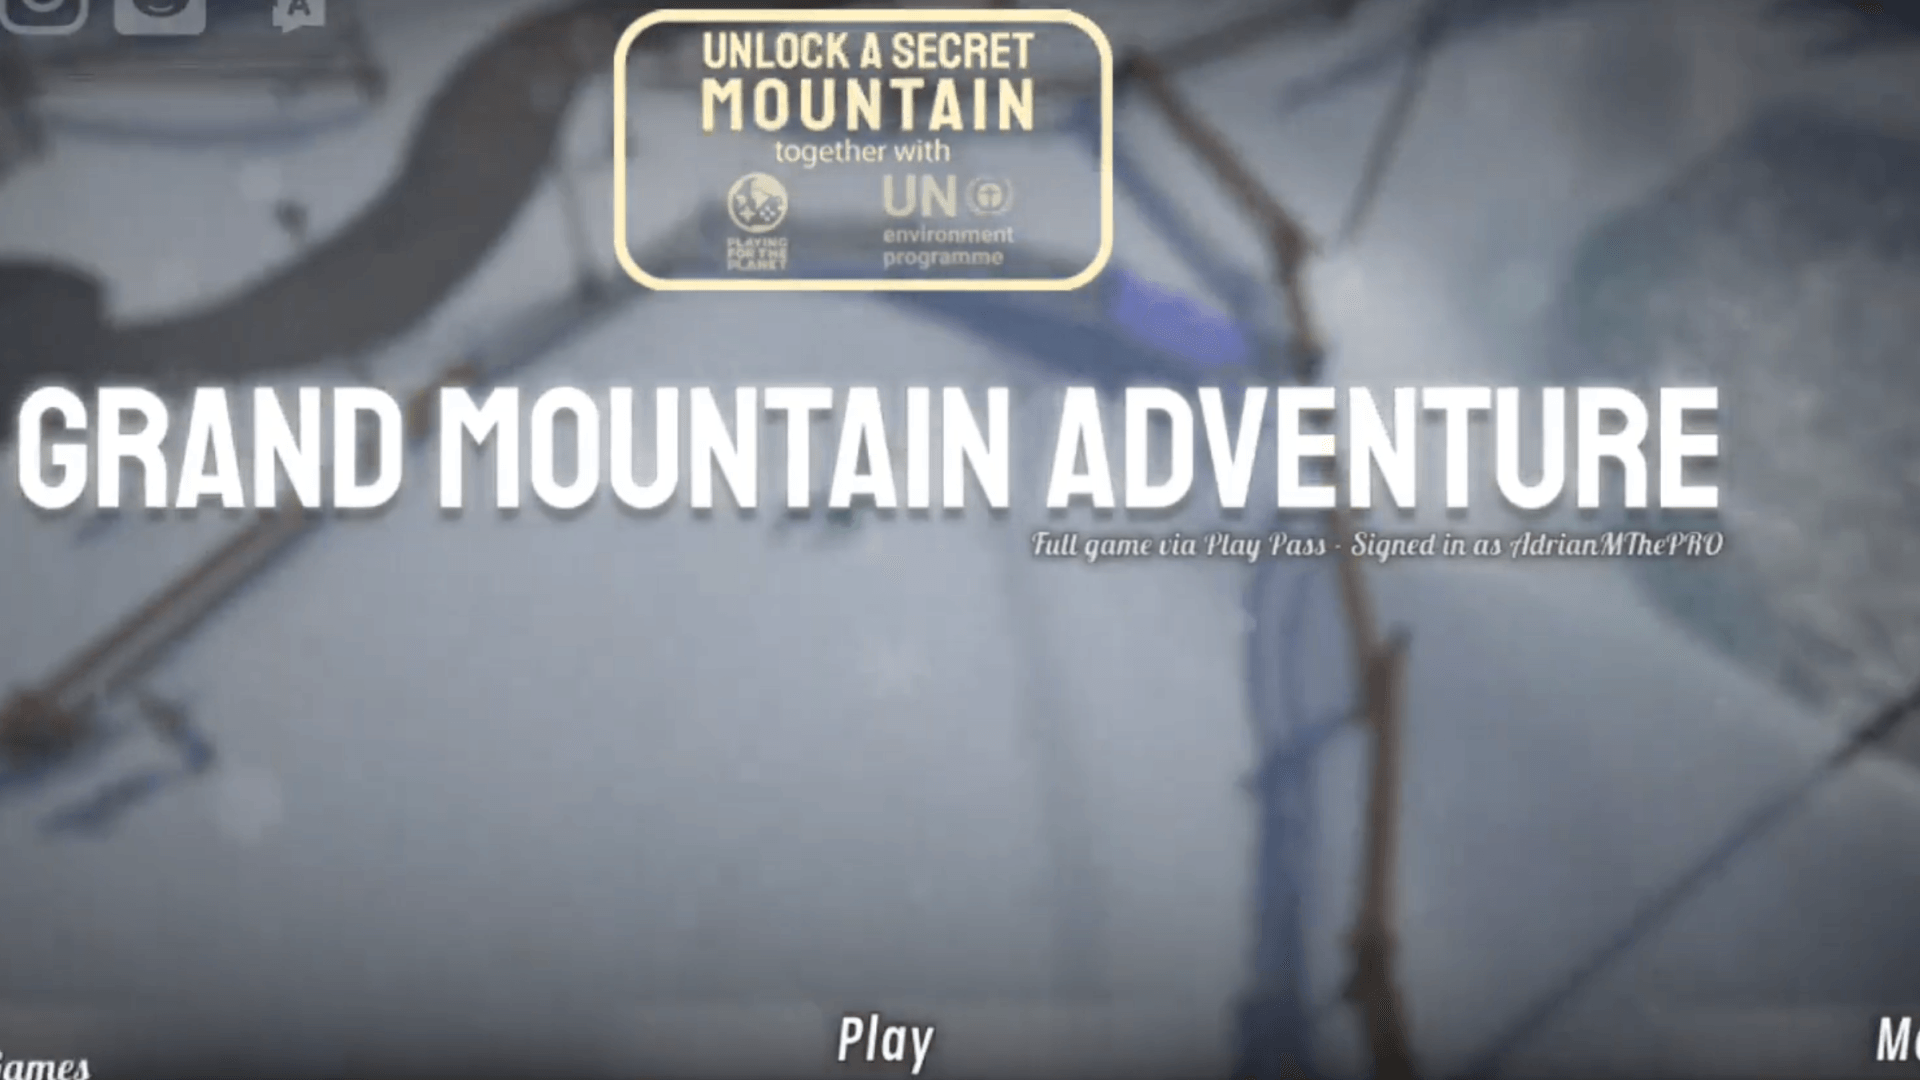 Grand Mountain Adventure